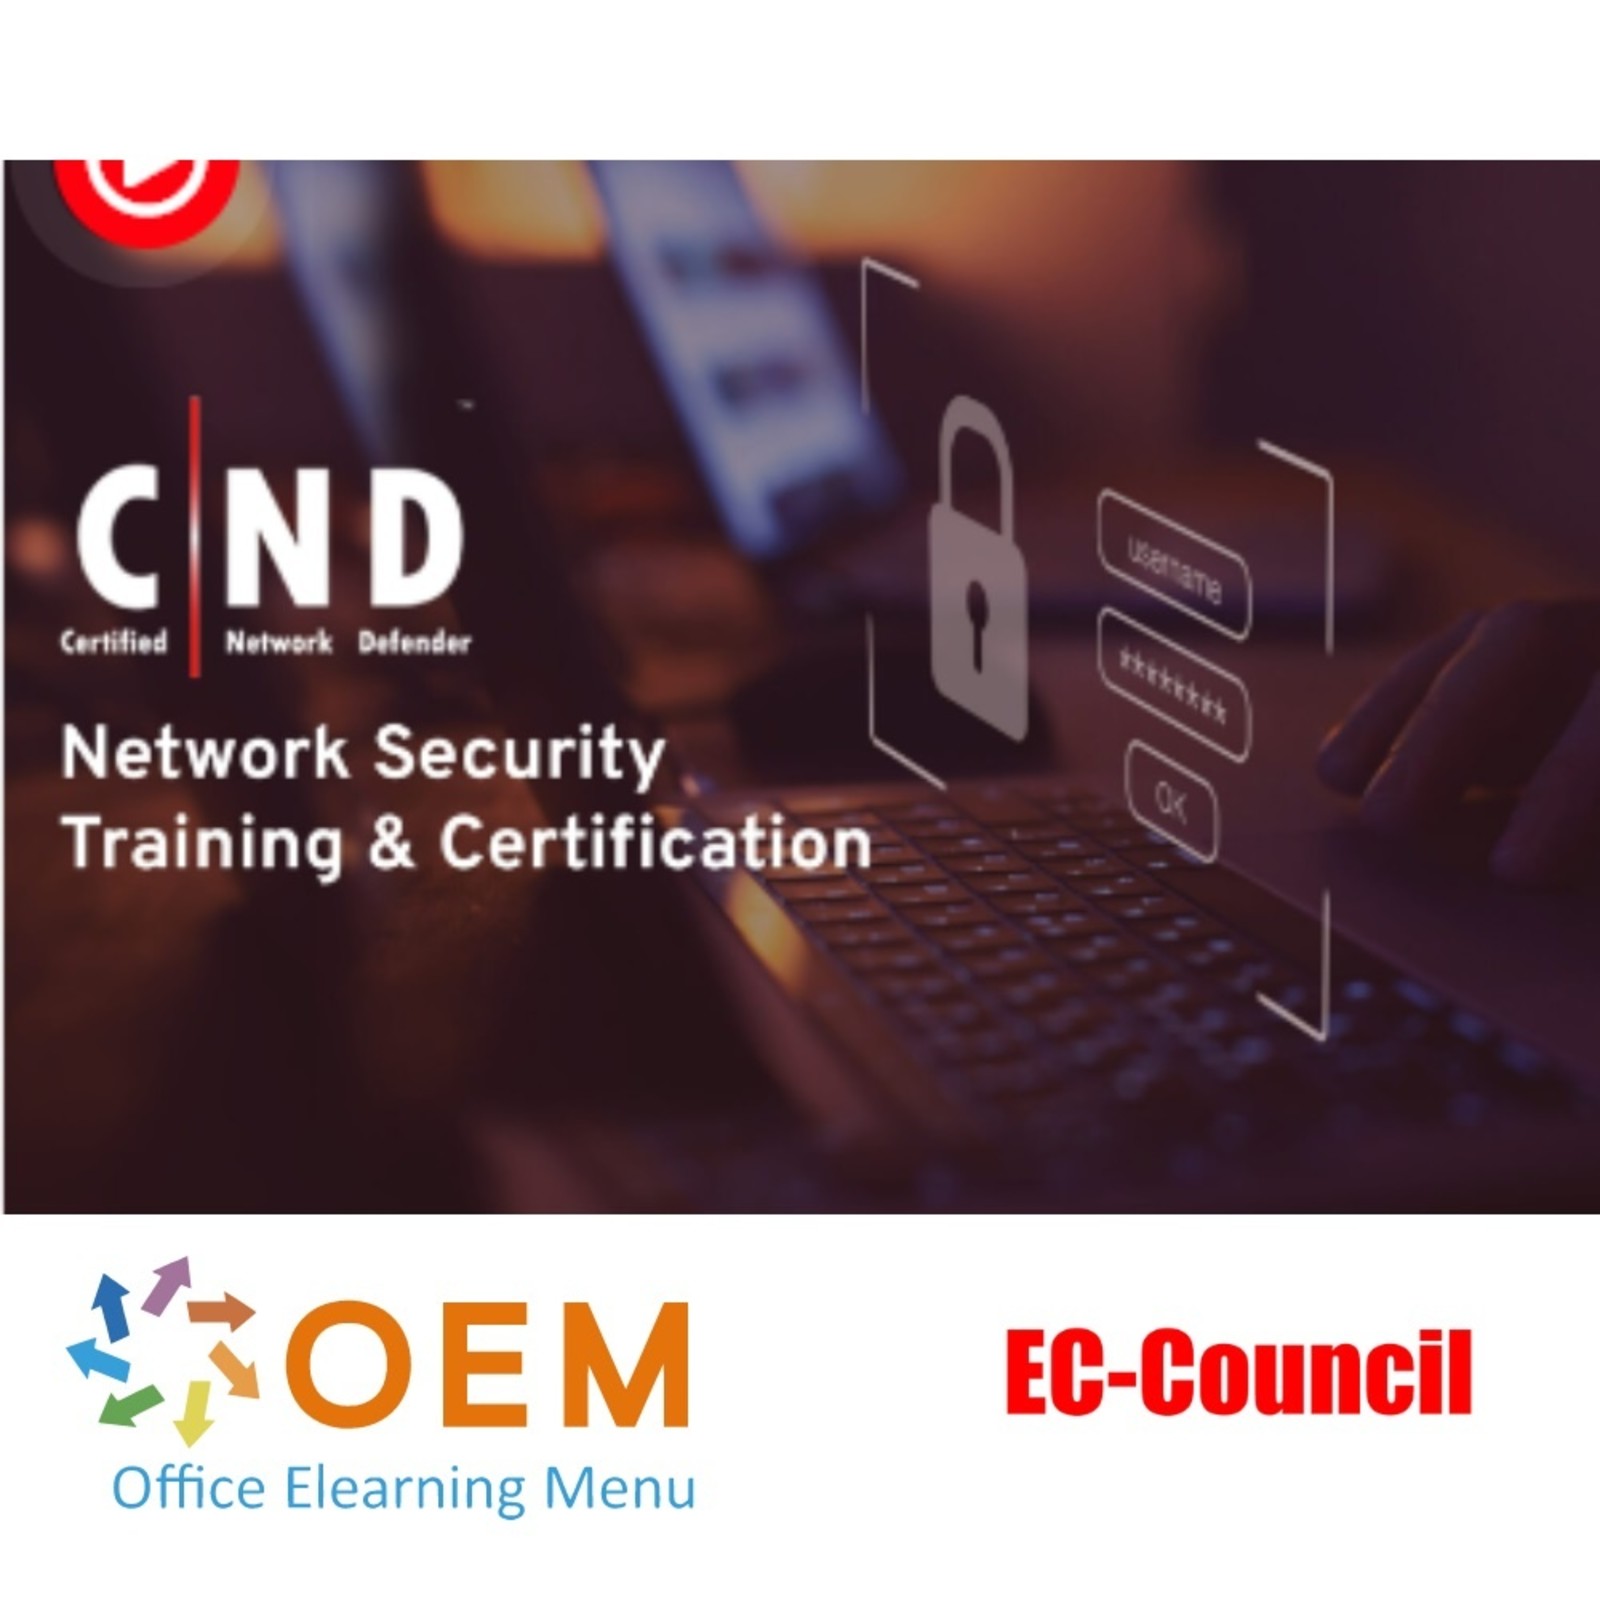 EC-Council Certified Network Defender (CND) Training